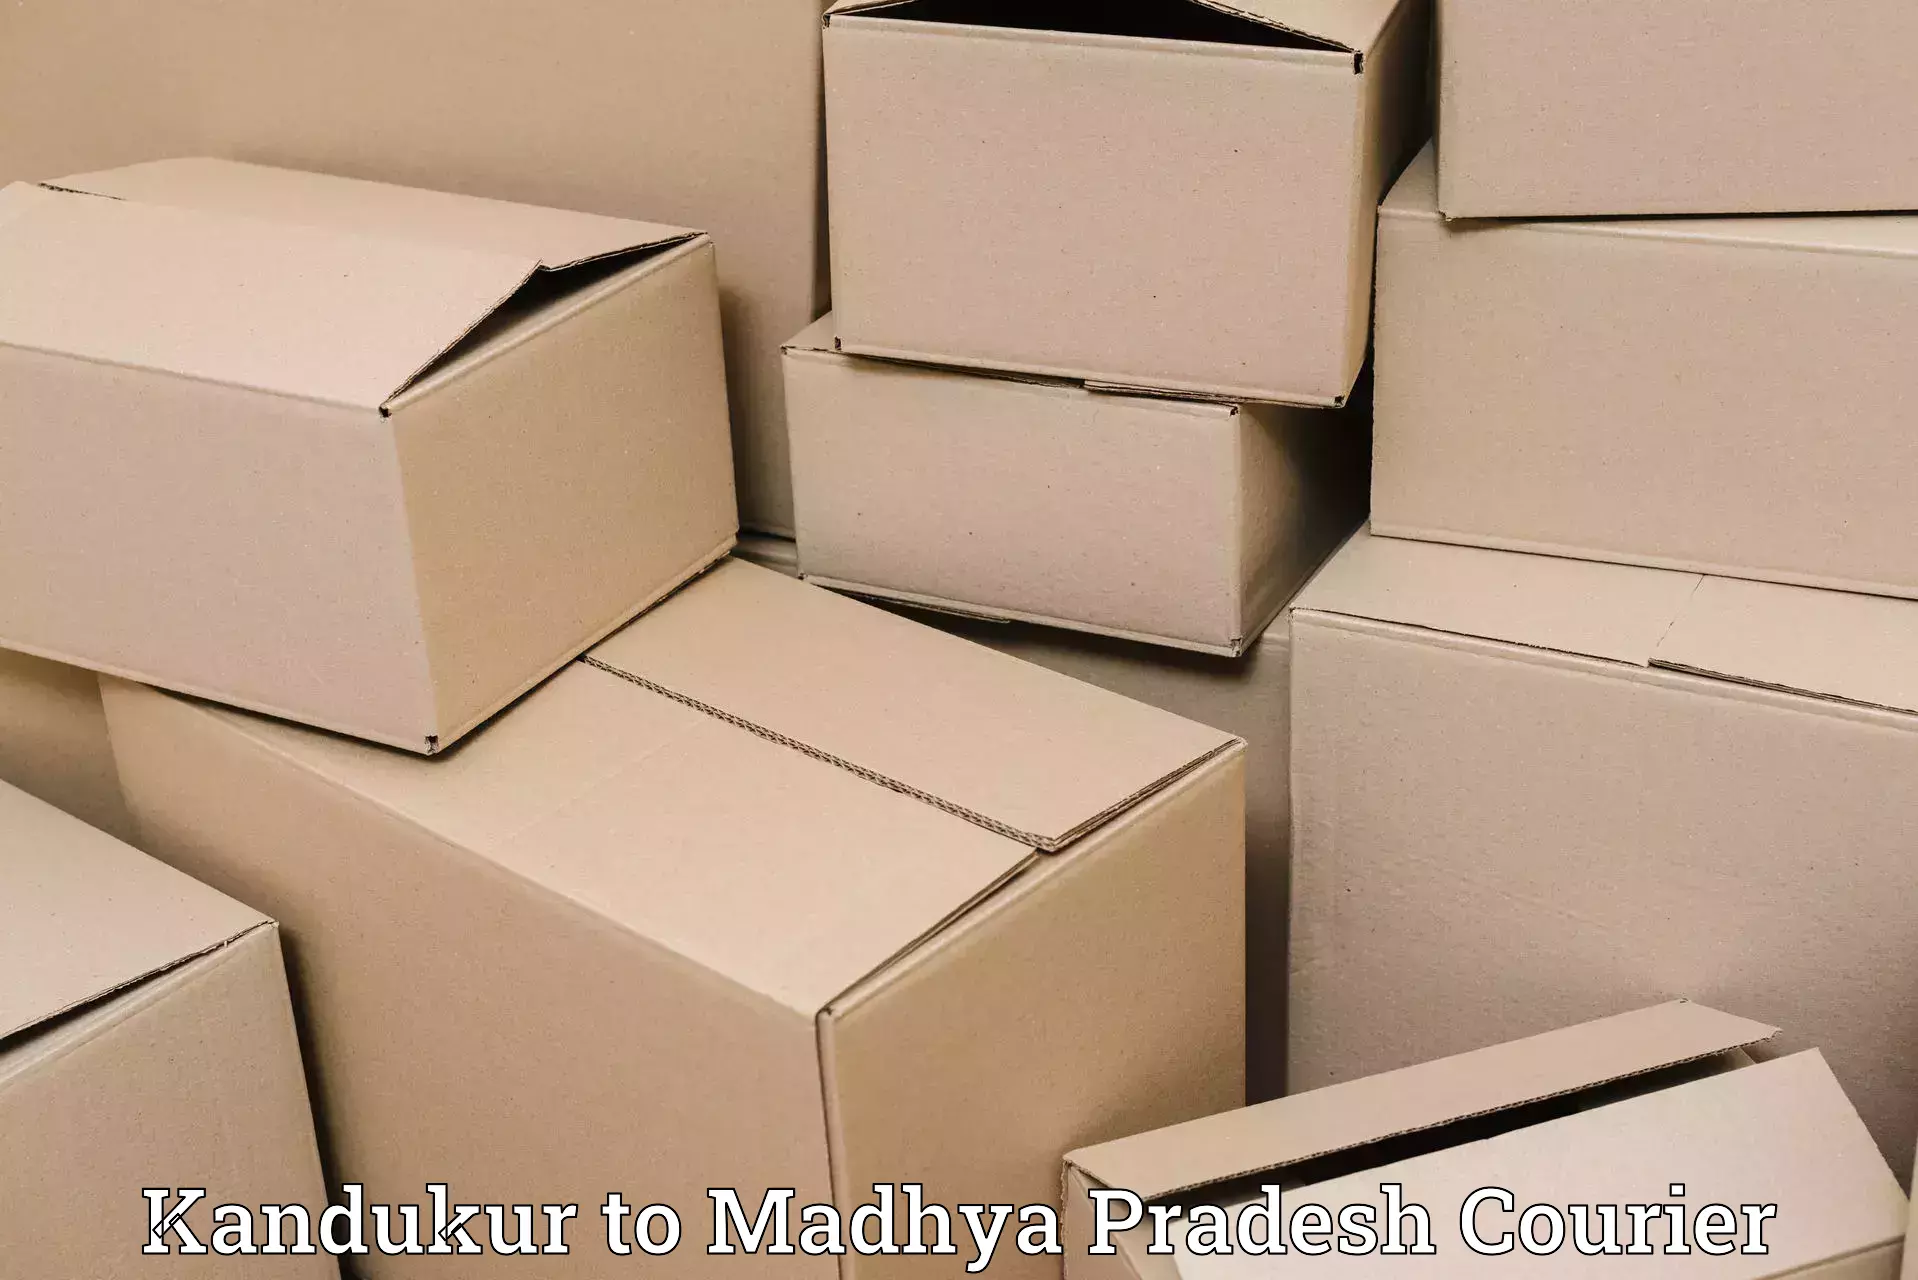 Reliable delivery network Kandukur to Madhya Pradesh